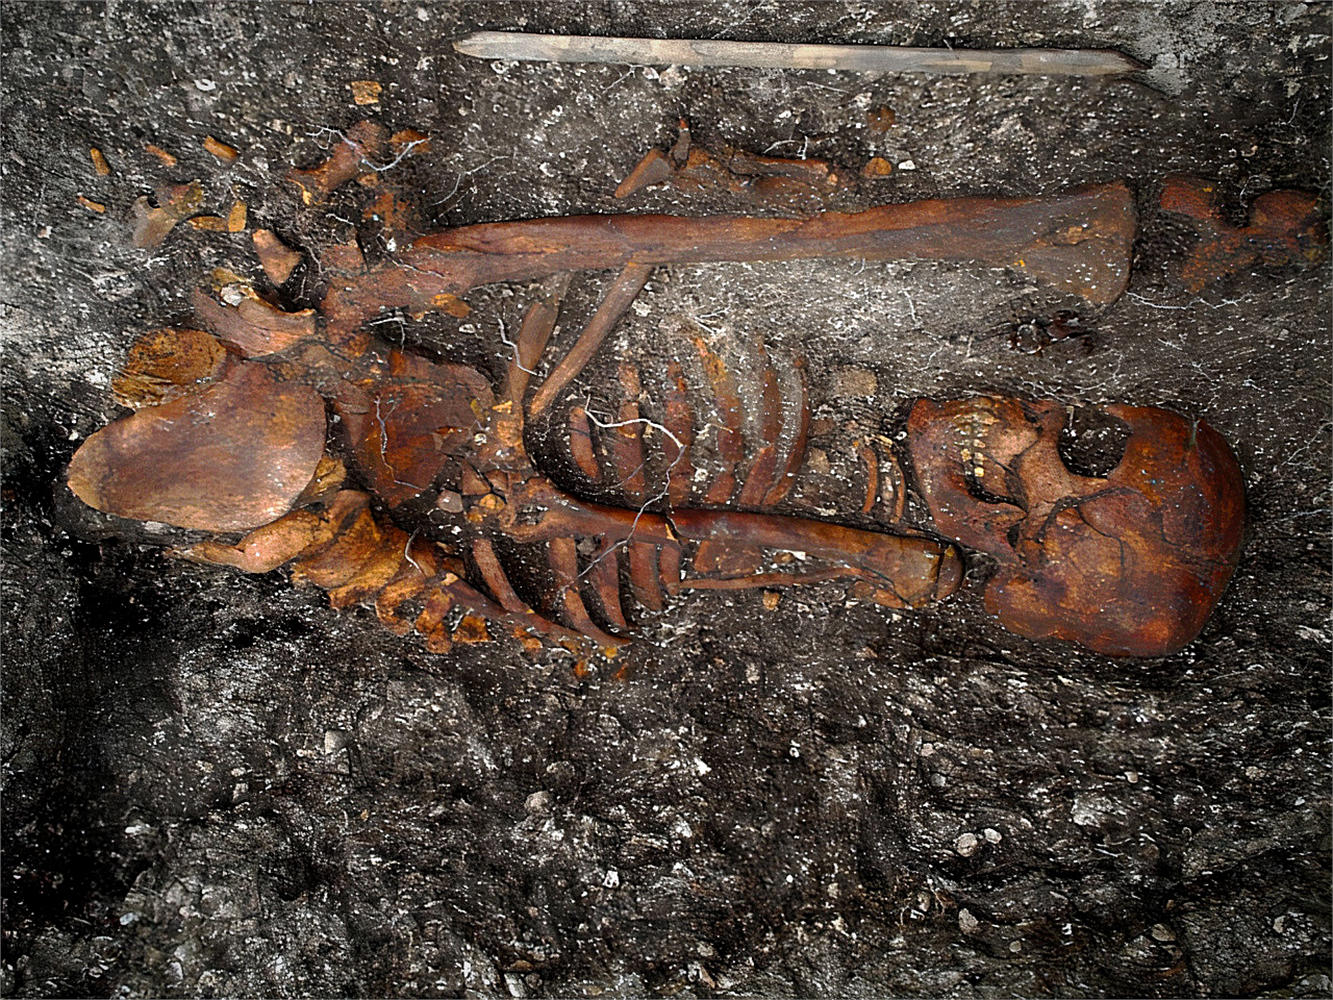 Skeleton-at-the-Site-in-Jubuicabeira-II-Brazil(1).jpg